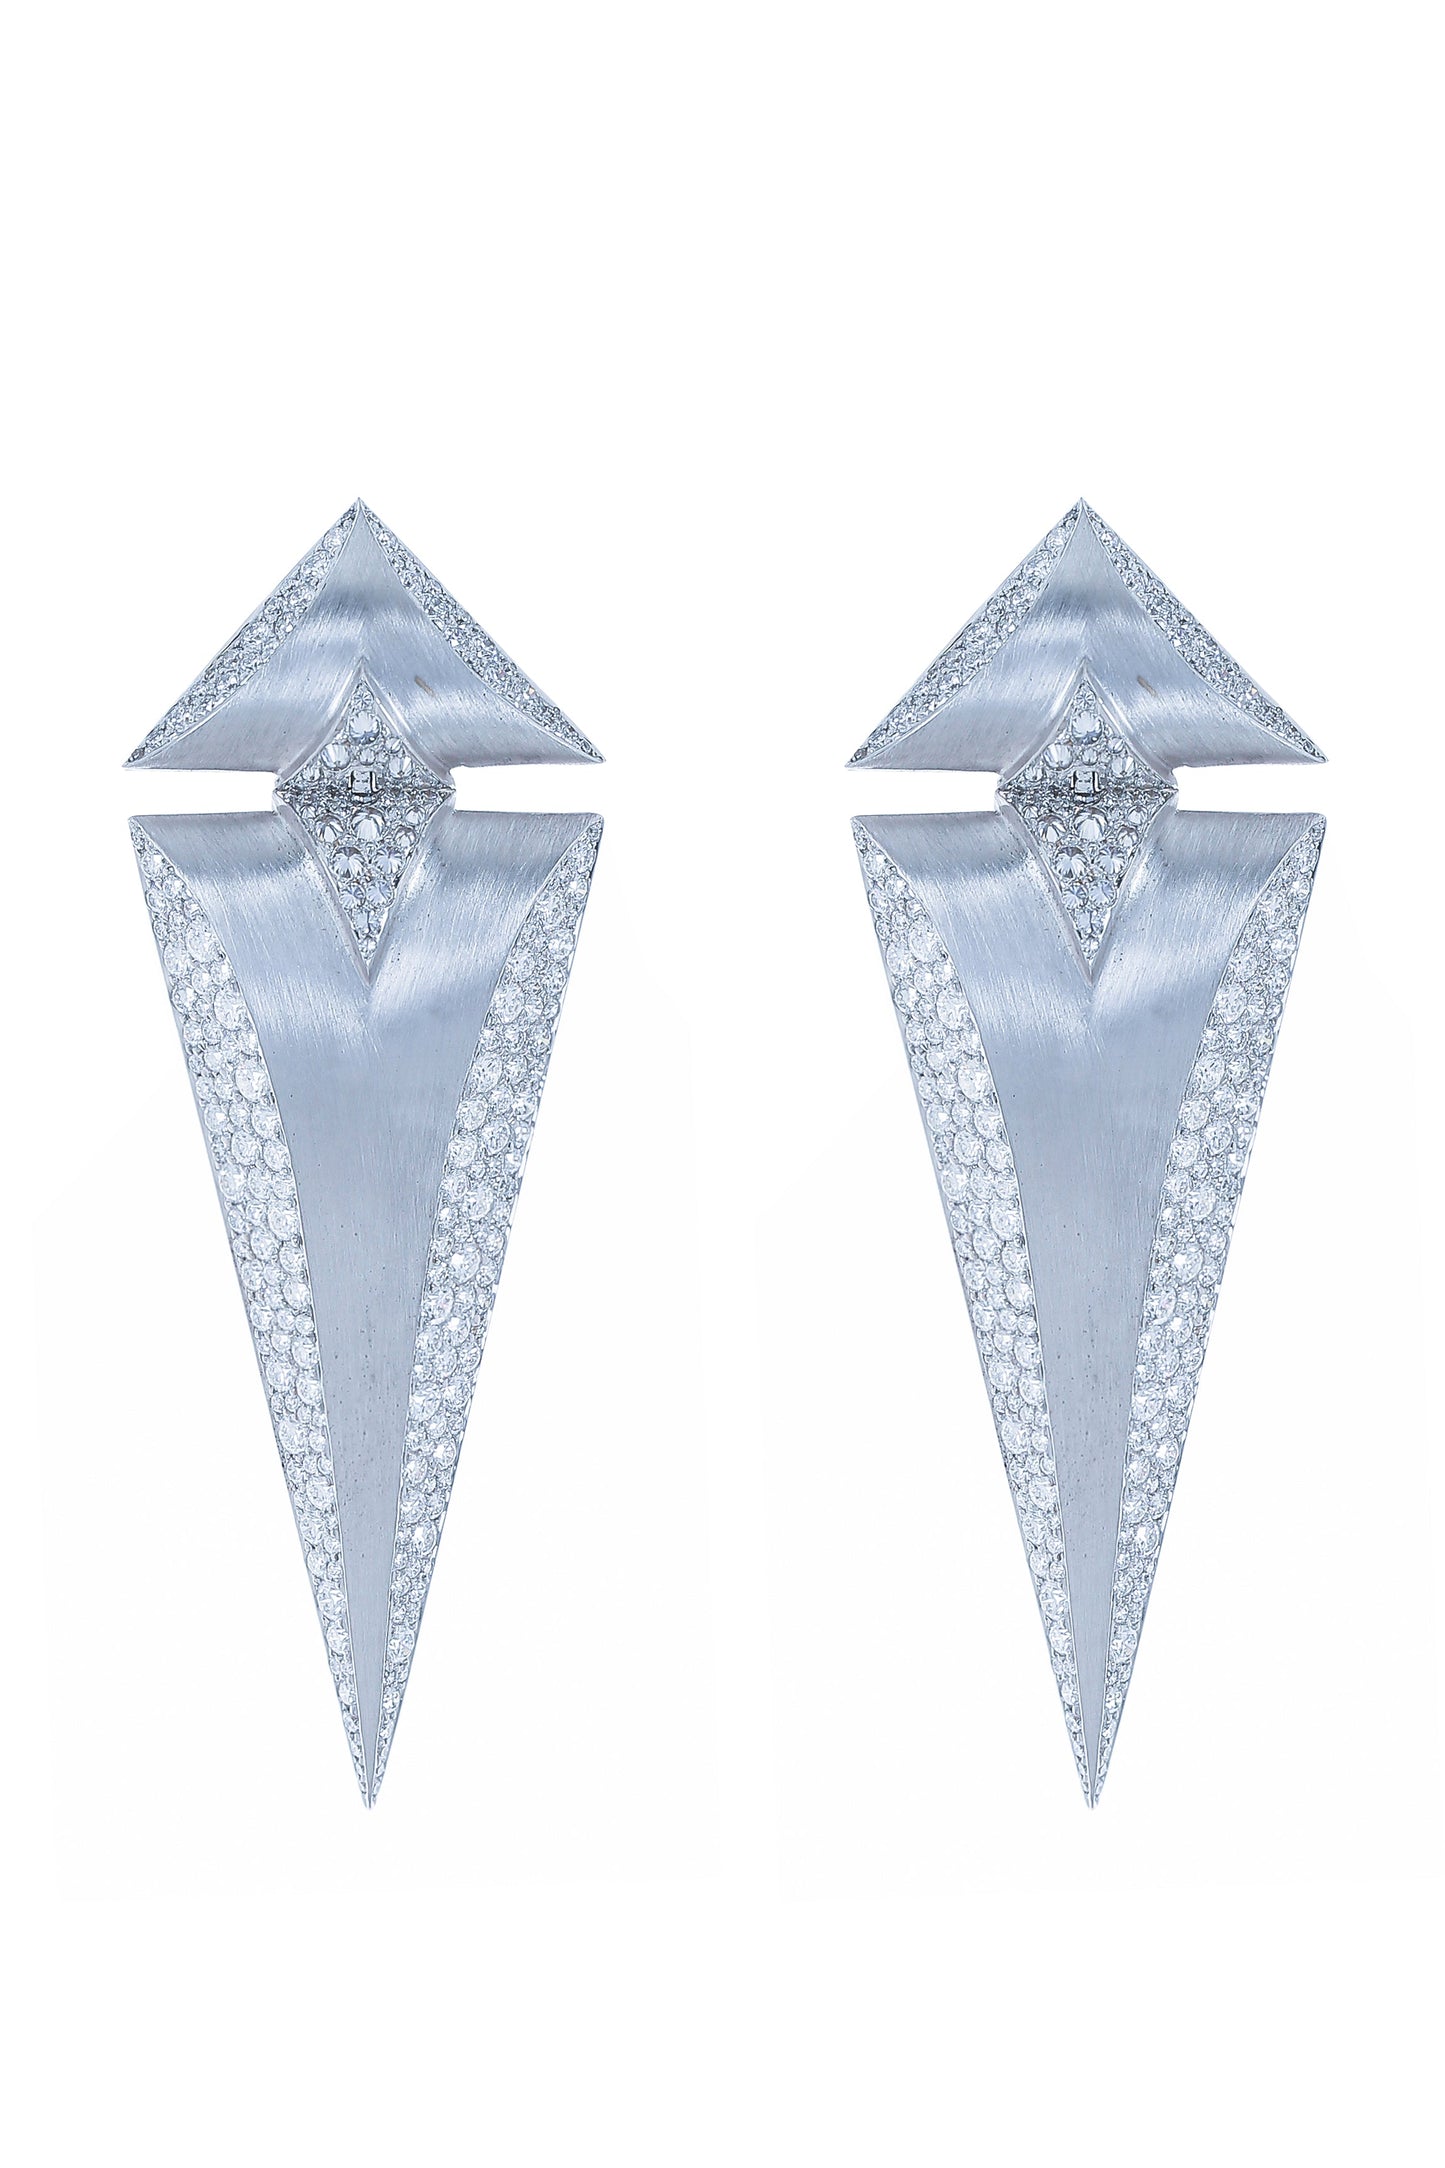 ARUNASHI-Diamond Triangle Earrings-WHITE GOLD